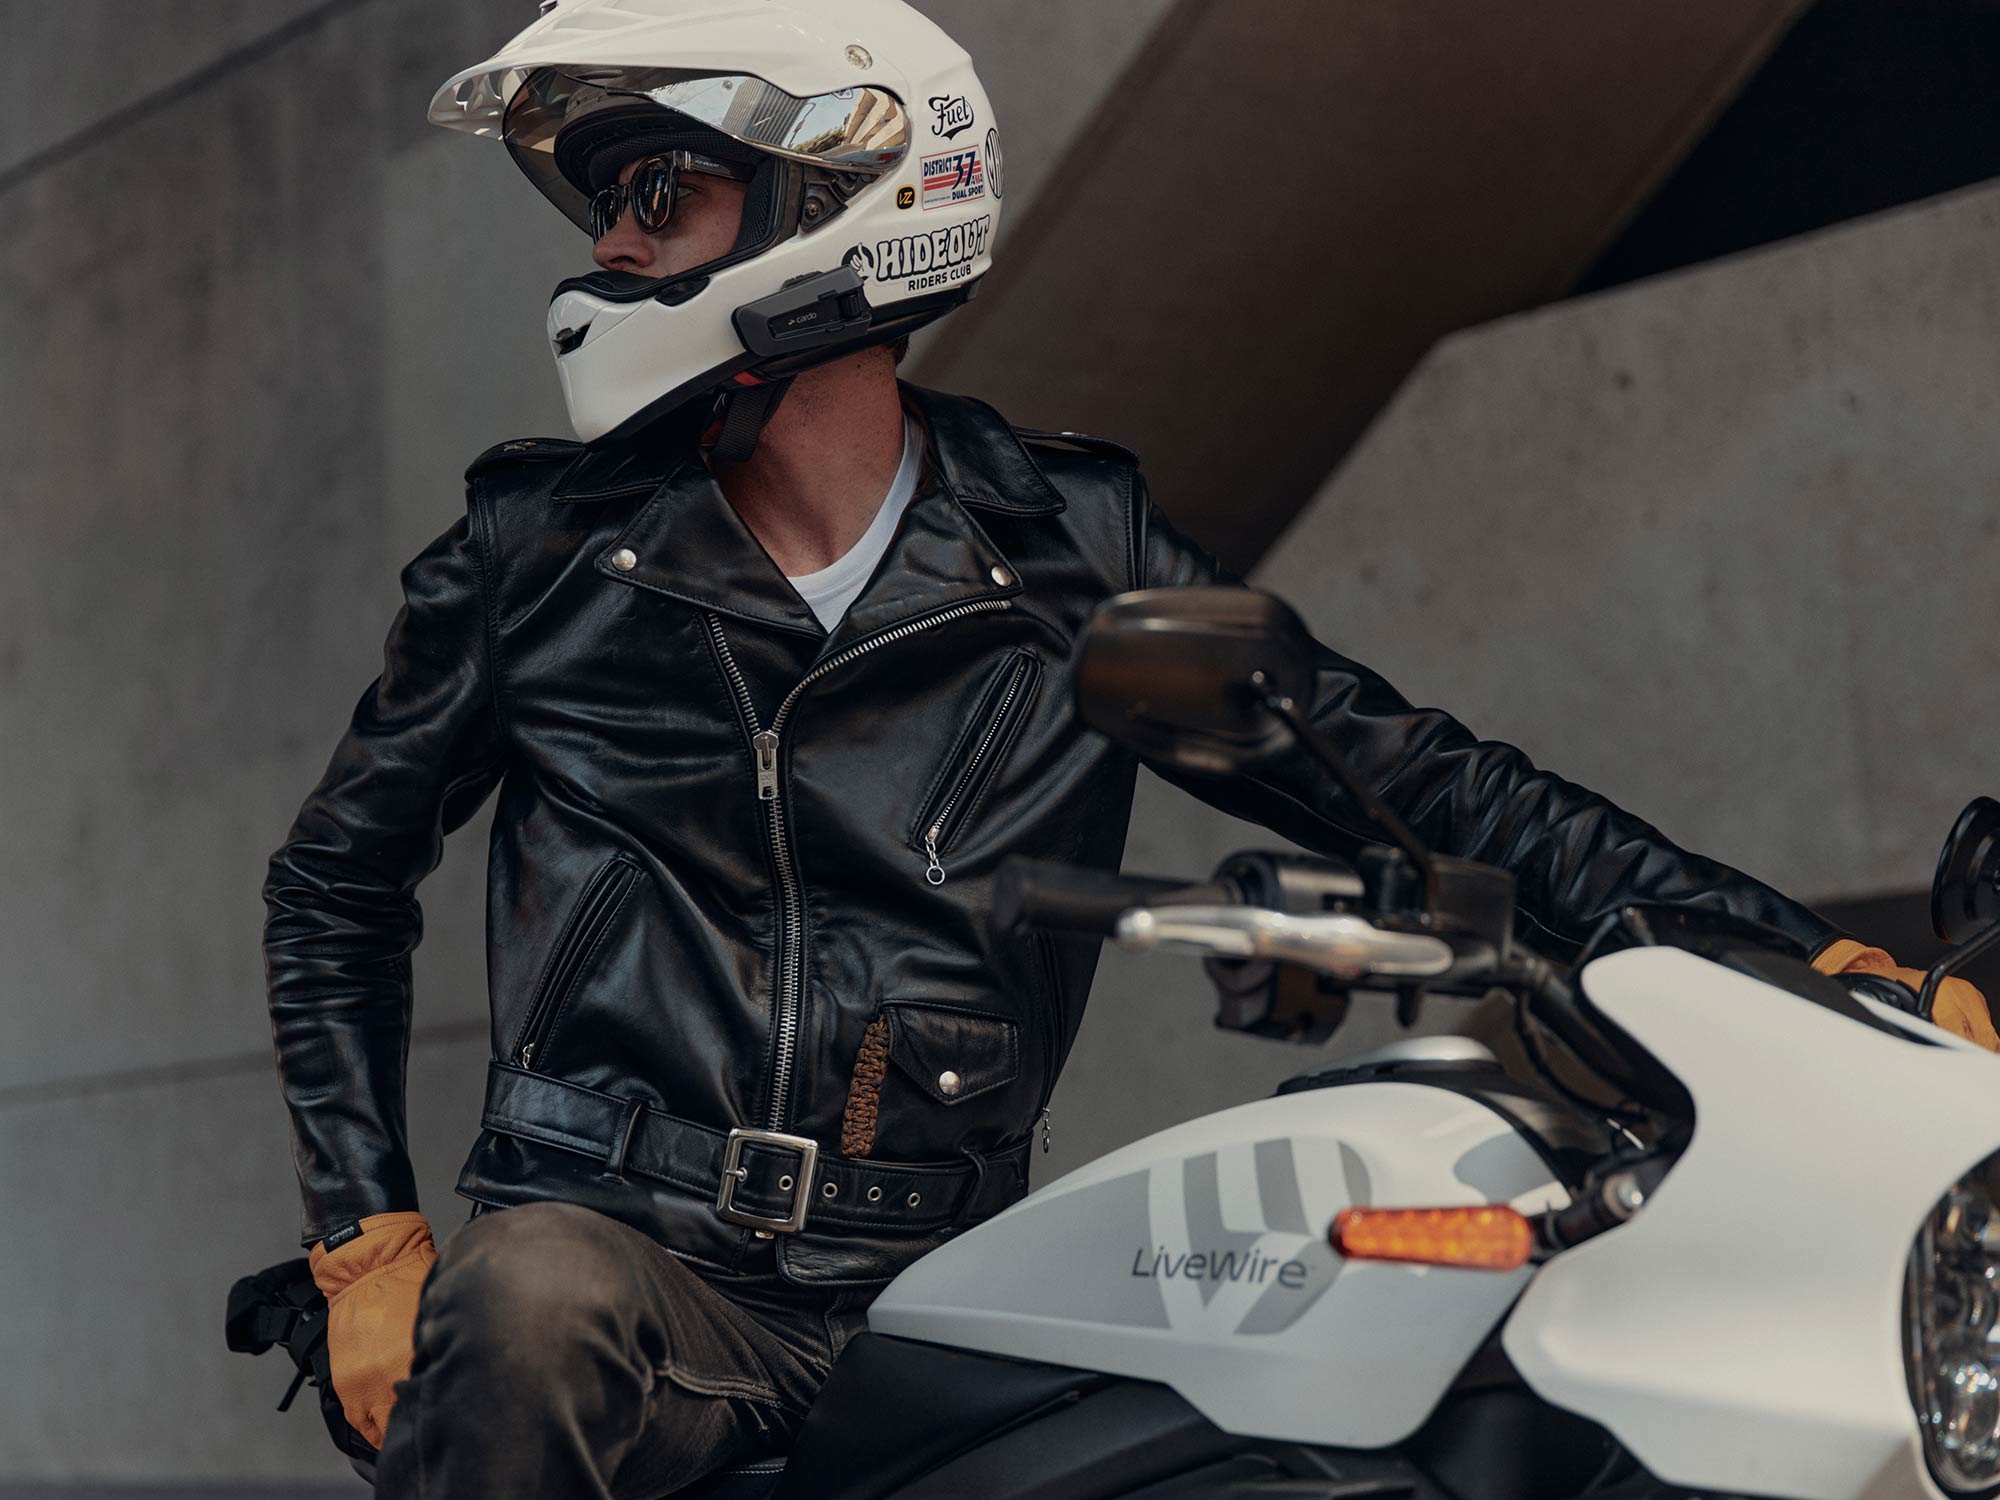 Leather Perfecto Moto Jacket